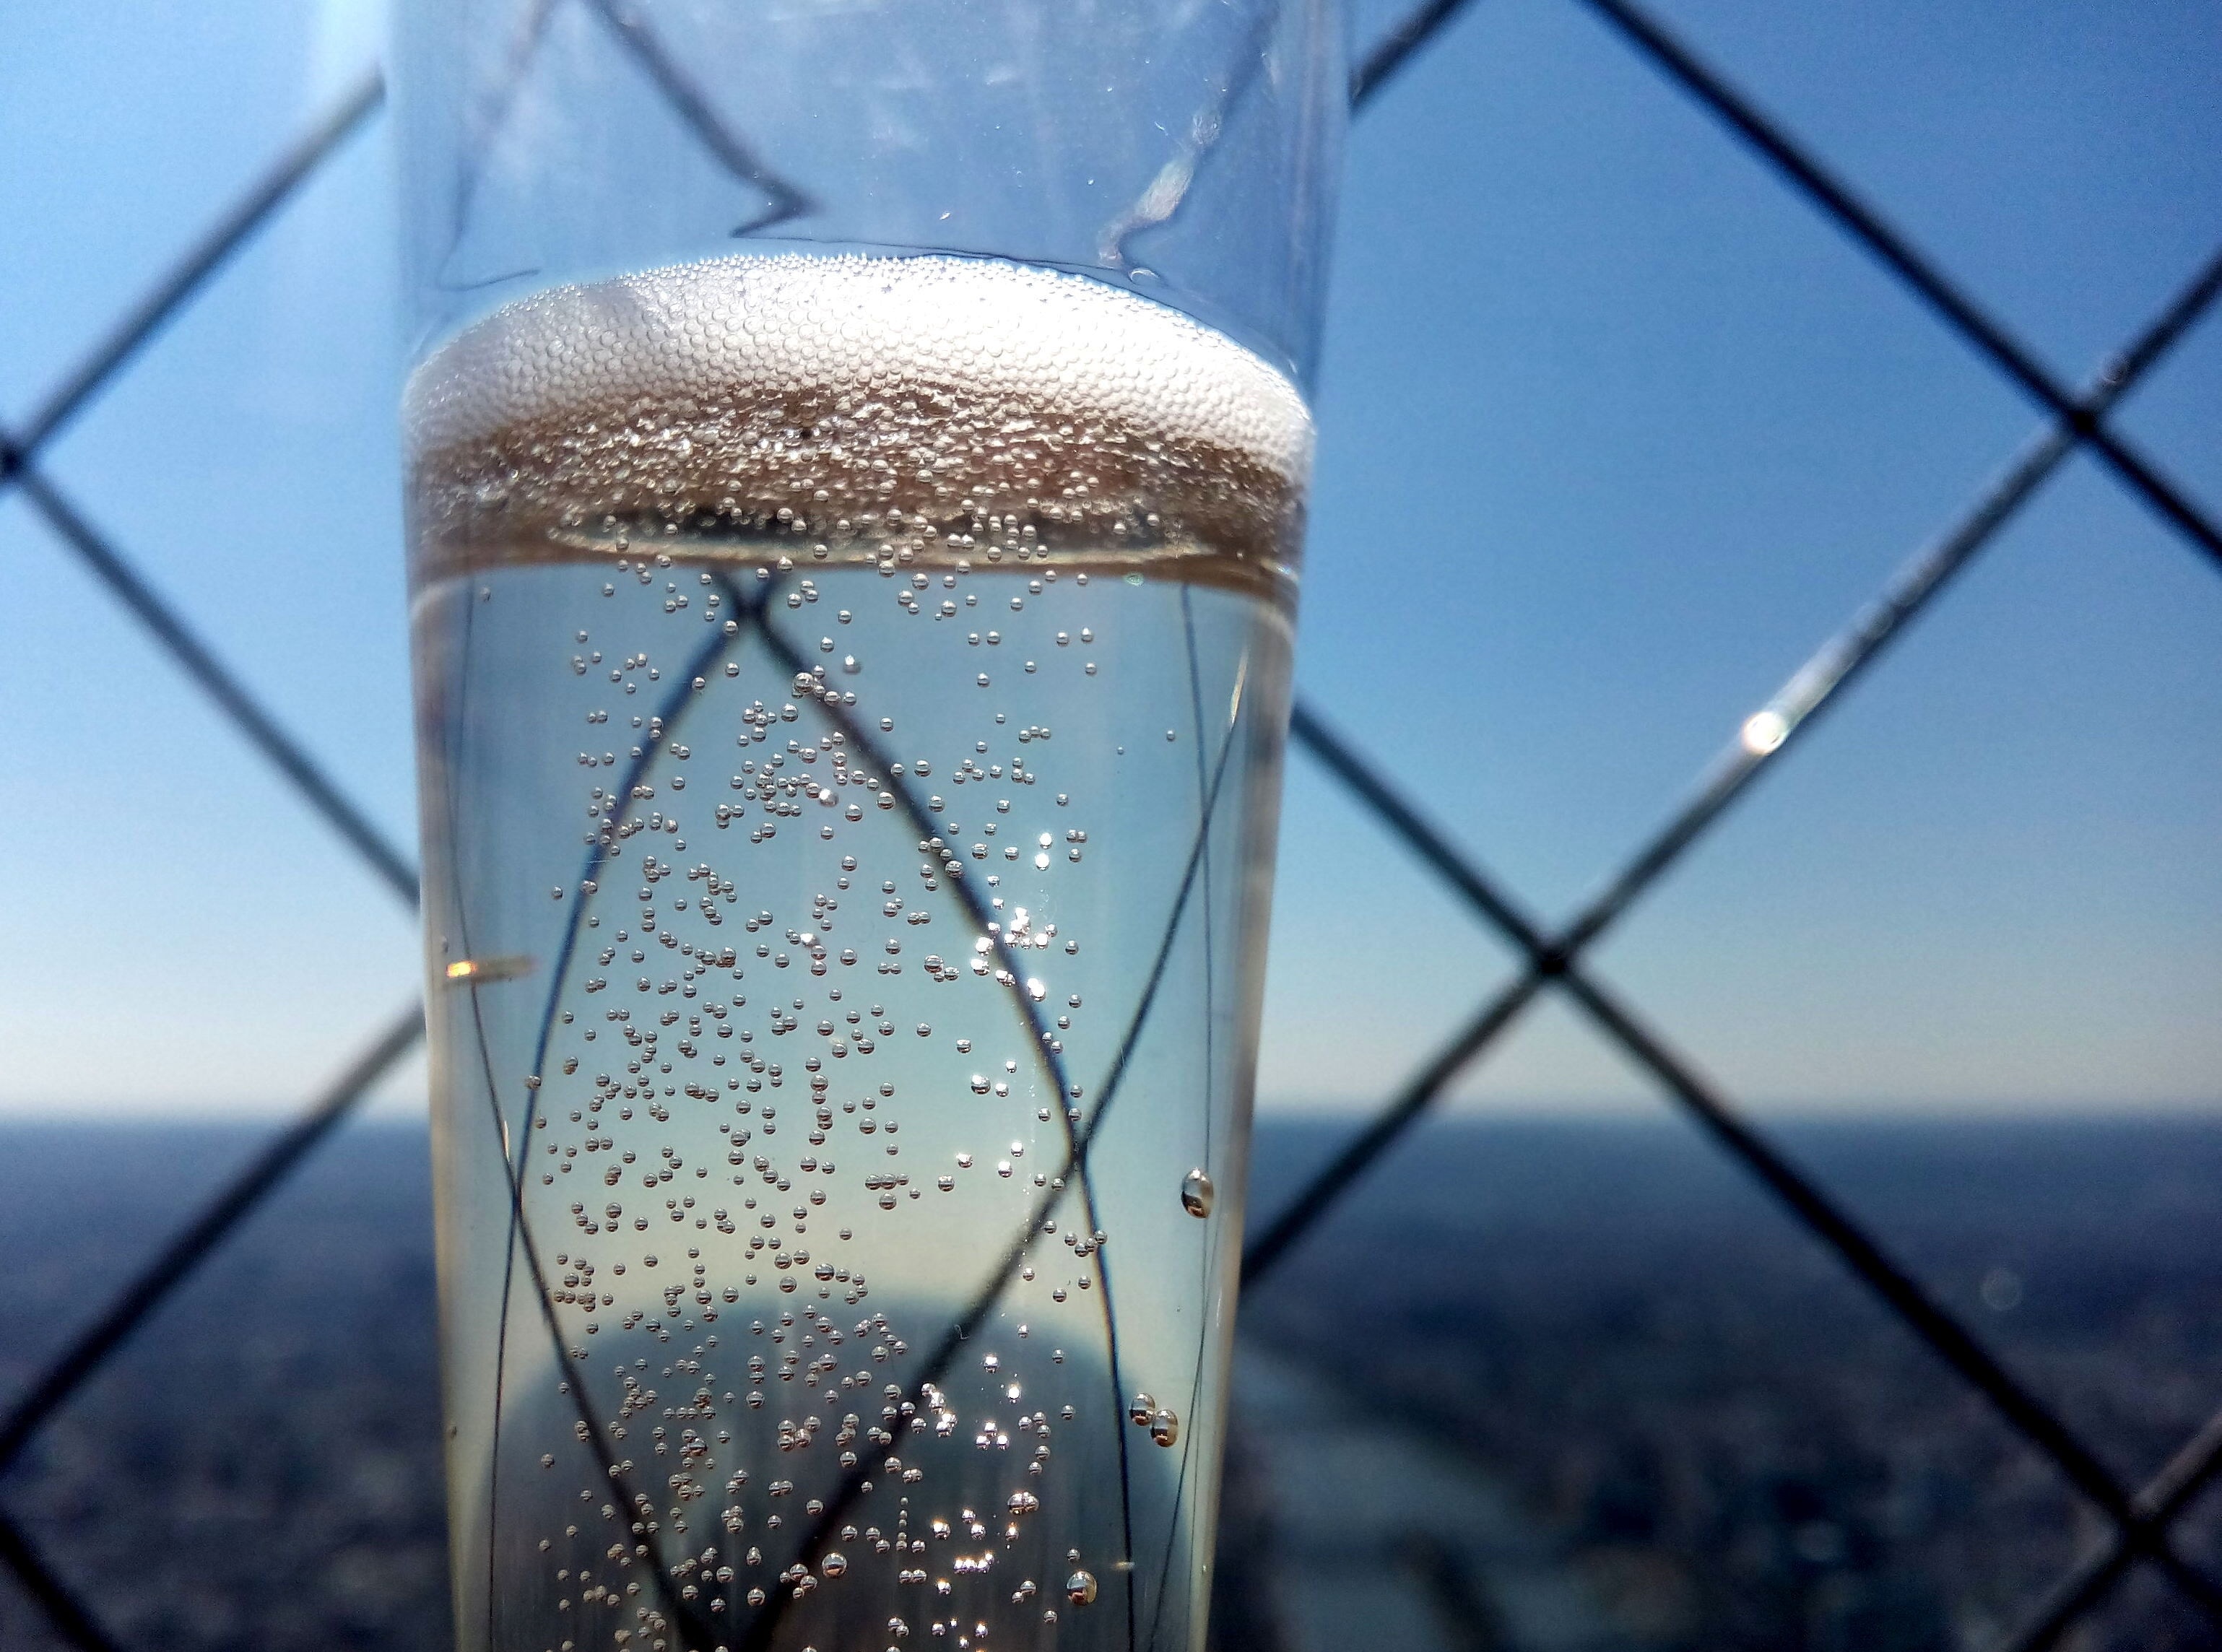 clear liquid in clear glass bottle